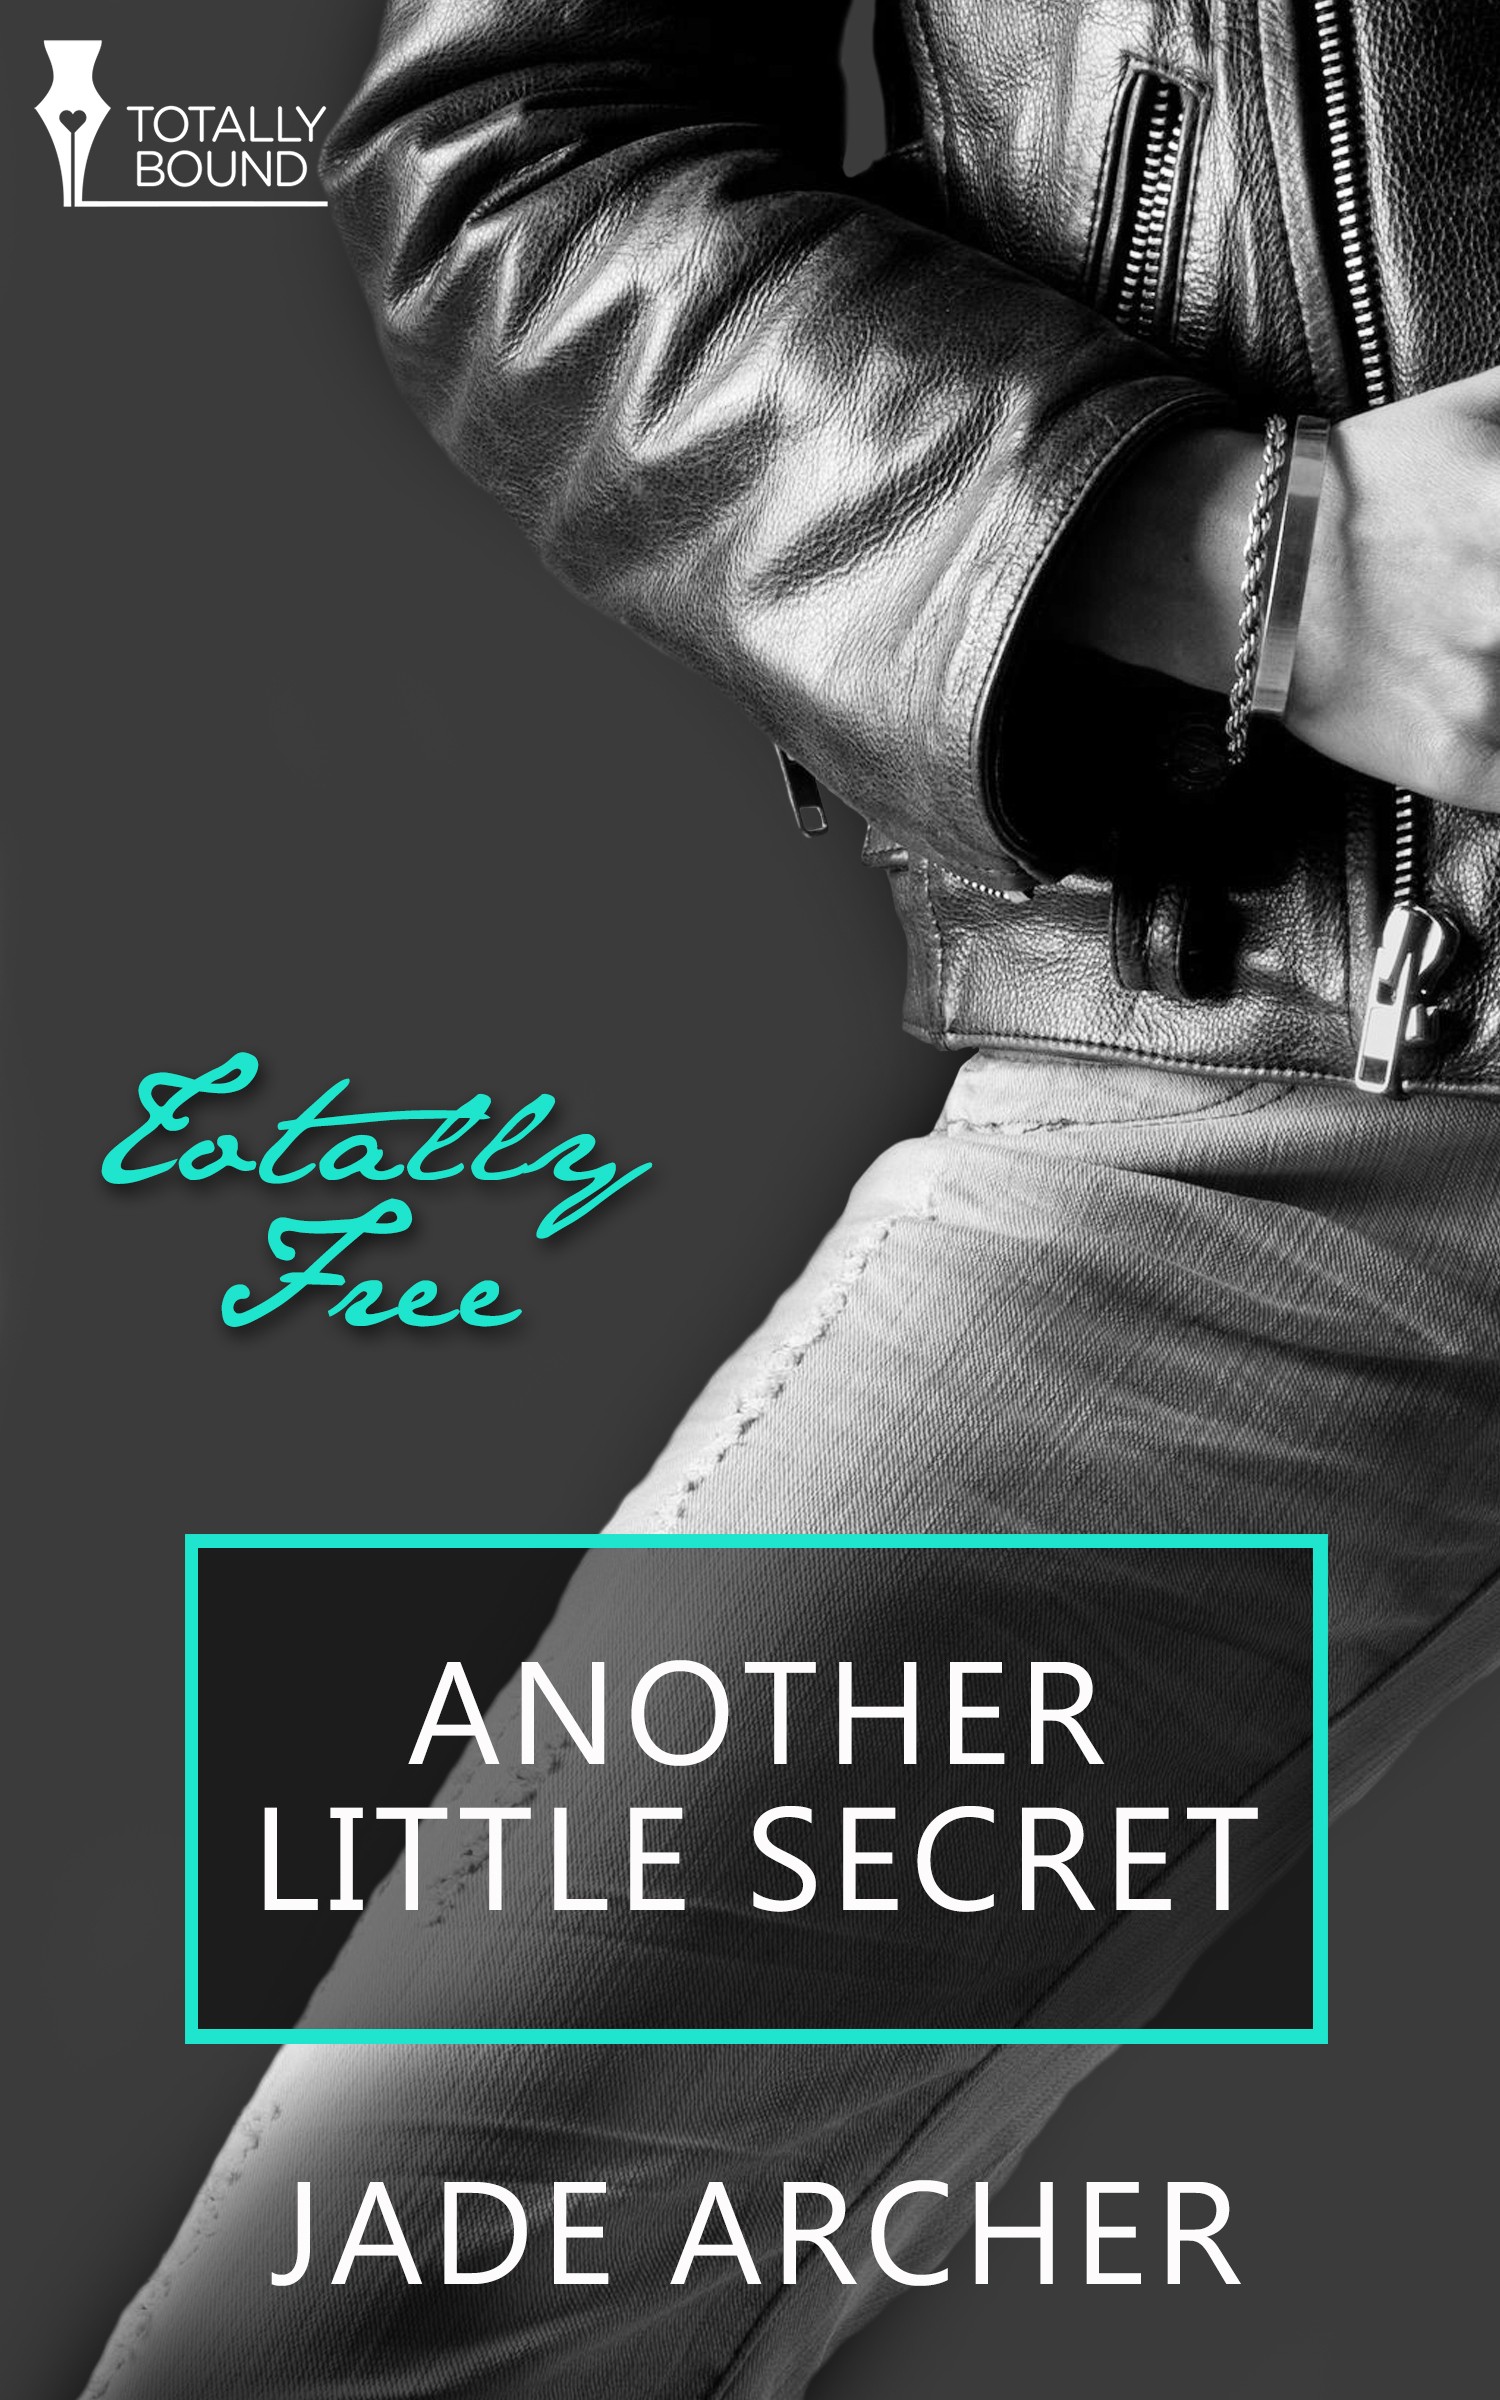 Another Little Secret (2013) by Jade Archer